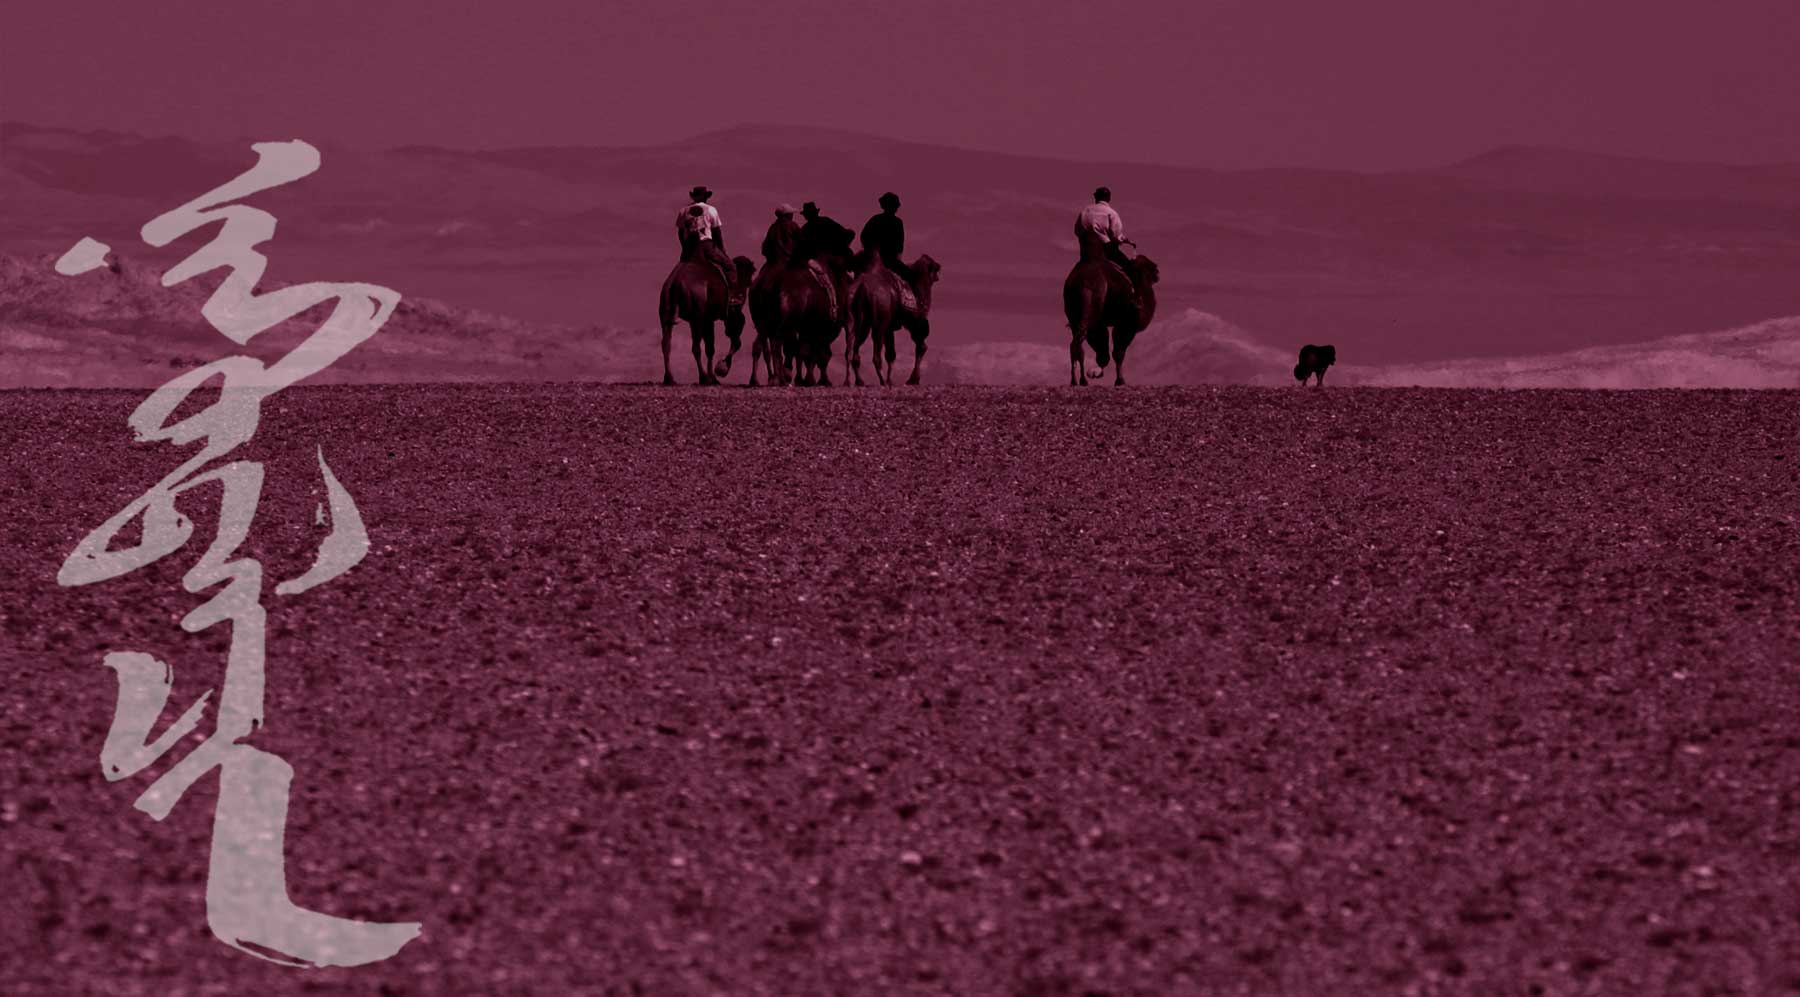 MONGOLIA TRAVEL PHOTOS - Camel Riding Gobi Desert - Sound of Silence - Mongolia Nomads Tours